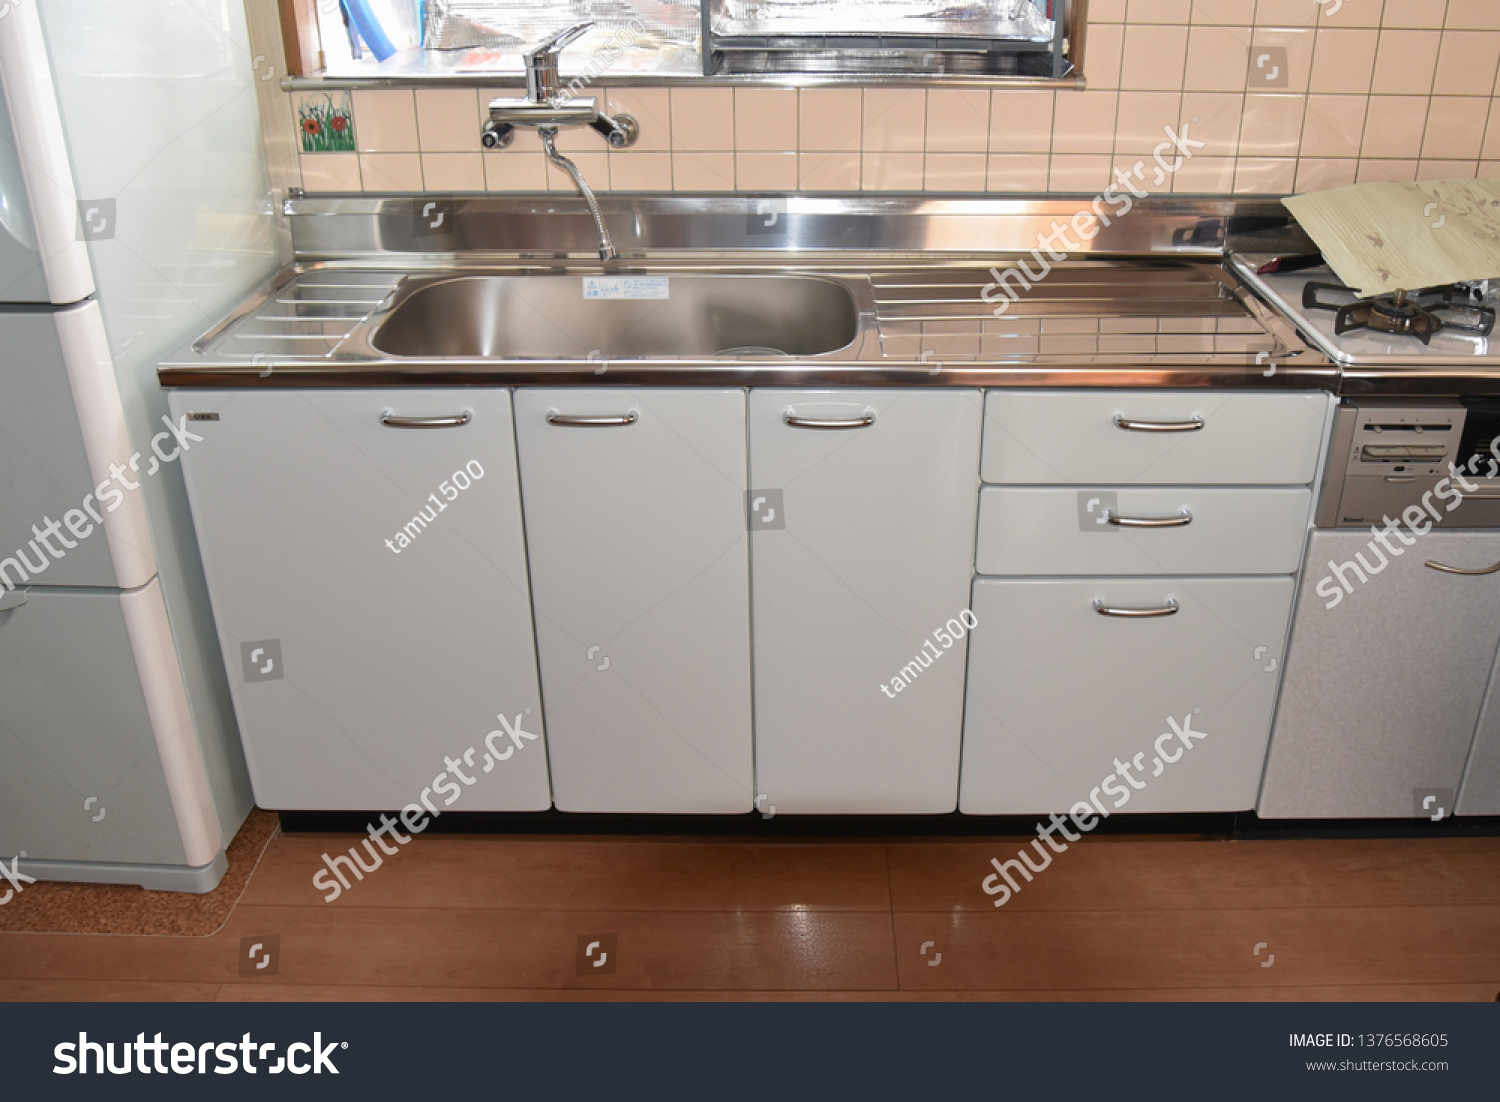 Kitchen Renovation Kitchen Sink Replacement Work Stock Image